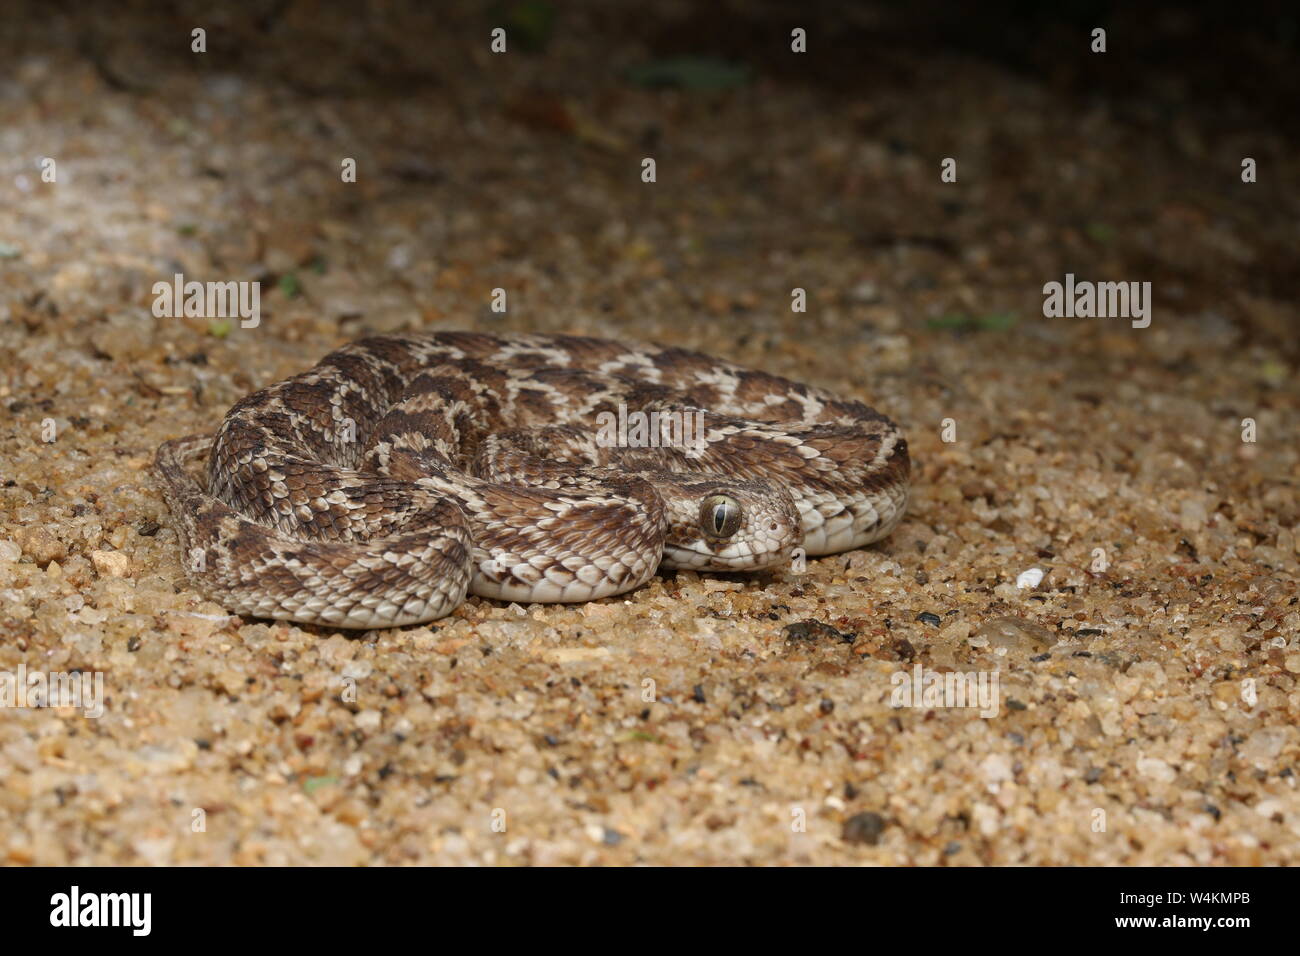 Saw-Scaled Viper, Echis carinatus a venomous snake in Sri Lanka and India Stock Photo